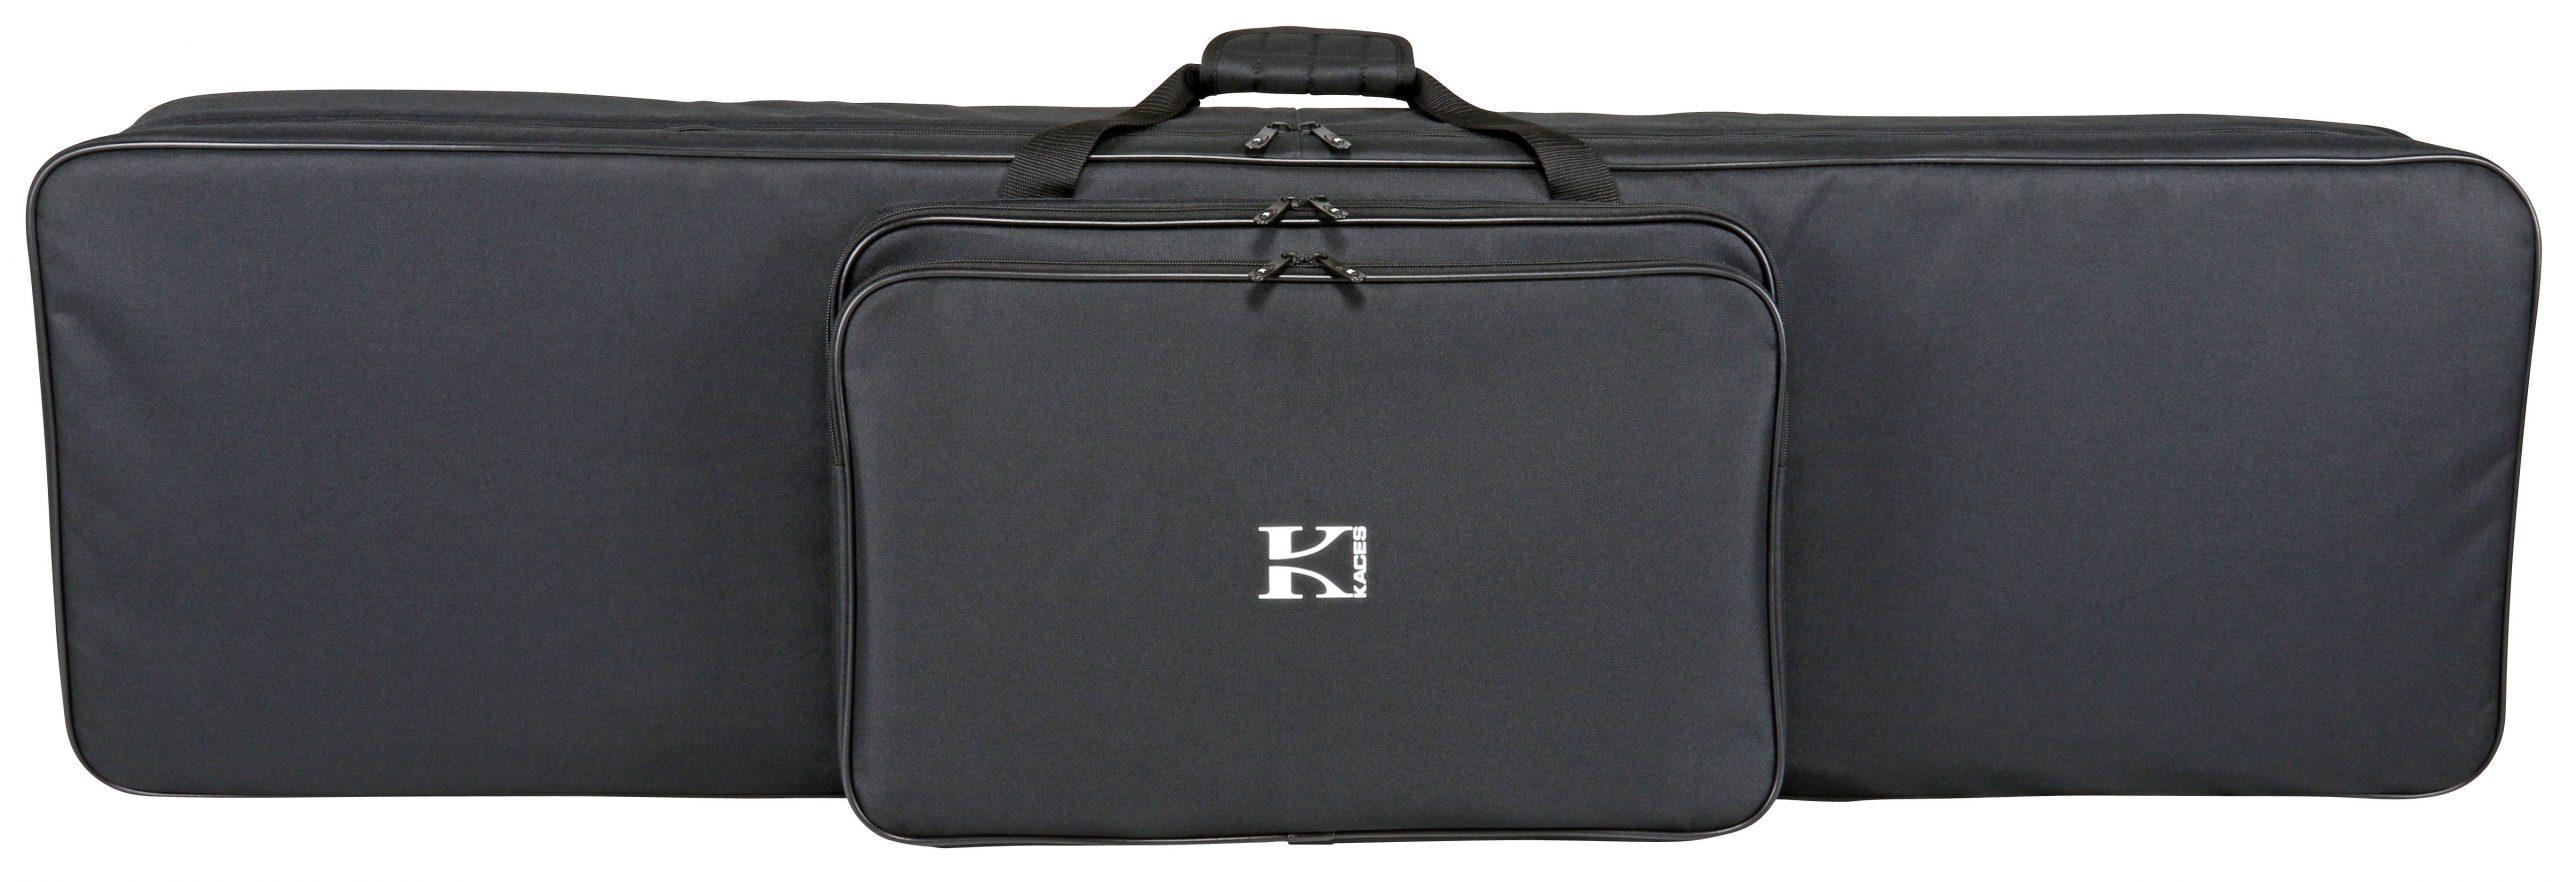 Xpress Keyboard Bag, 88 Note